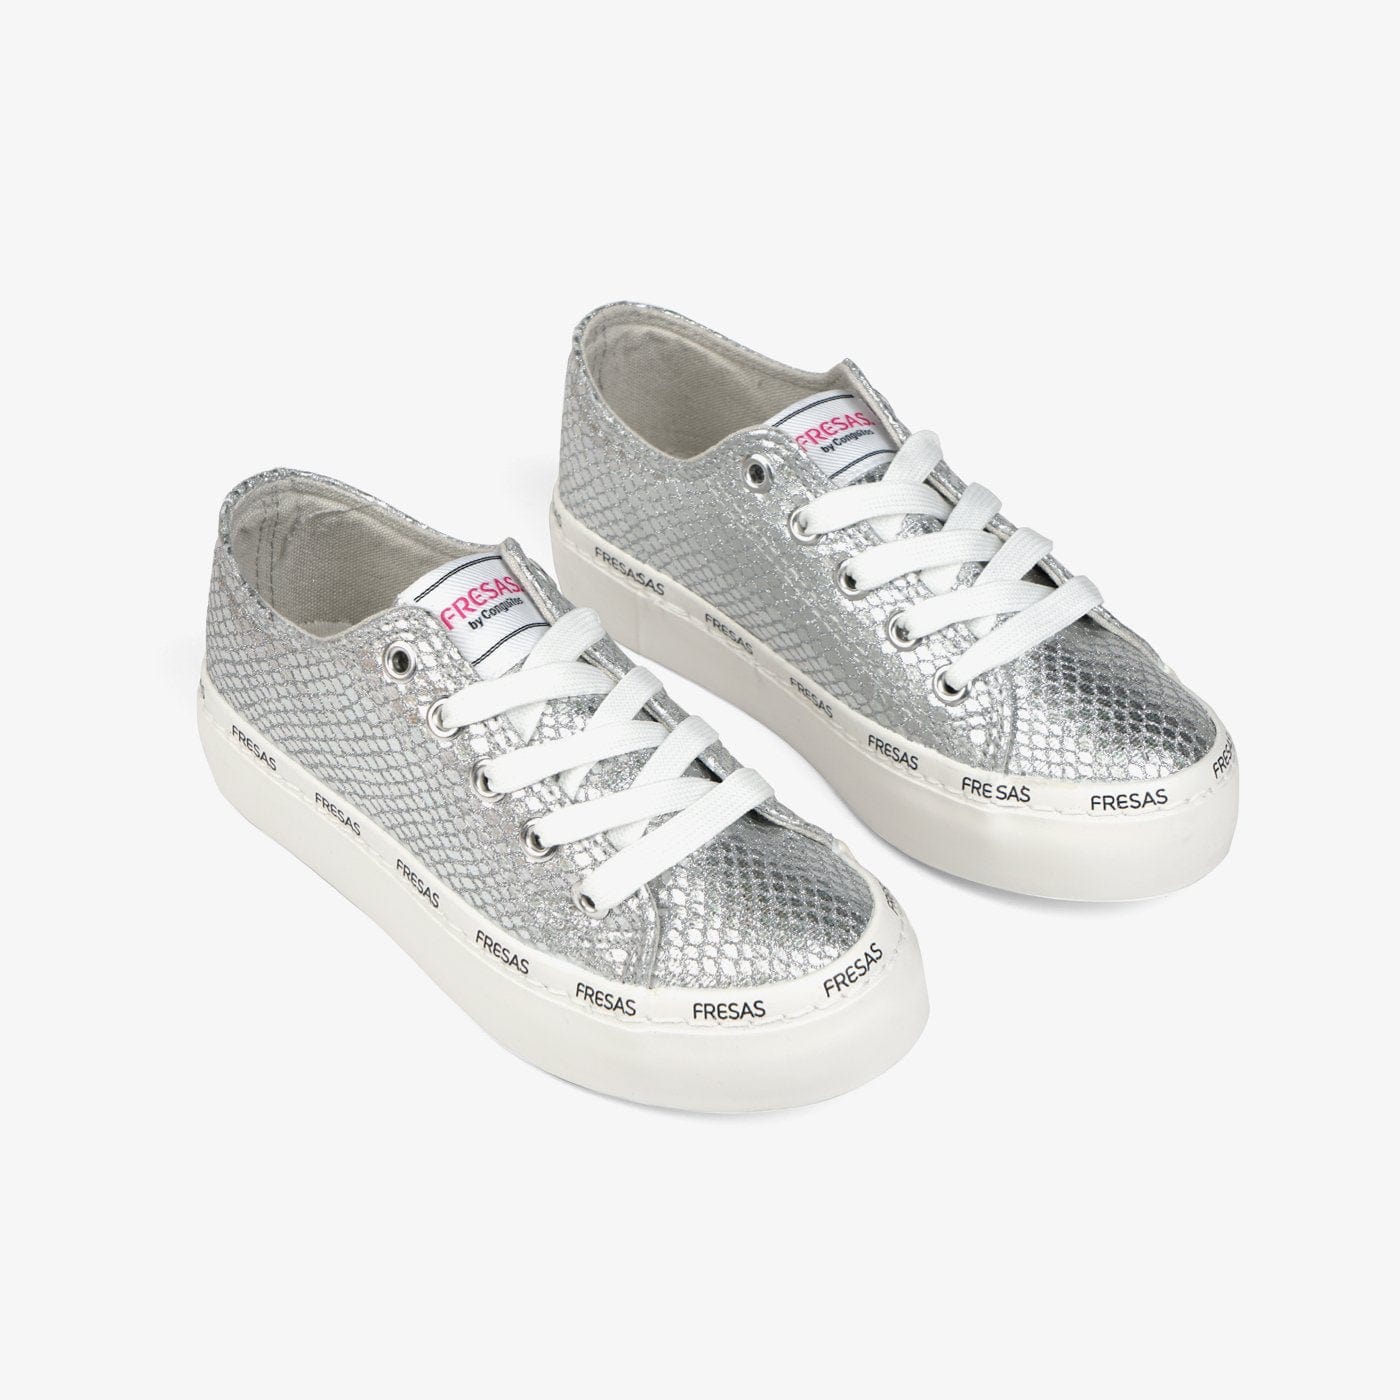 FRESAS CON NATA Shoes Girl's Metallized Silver Canvas Sneakers